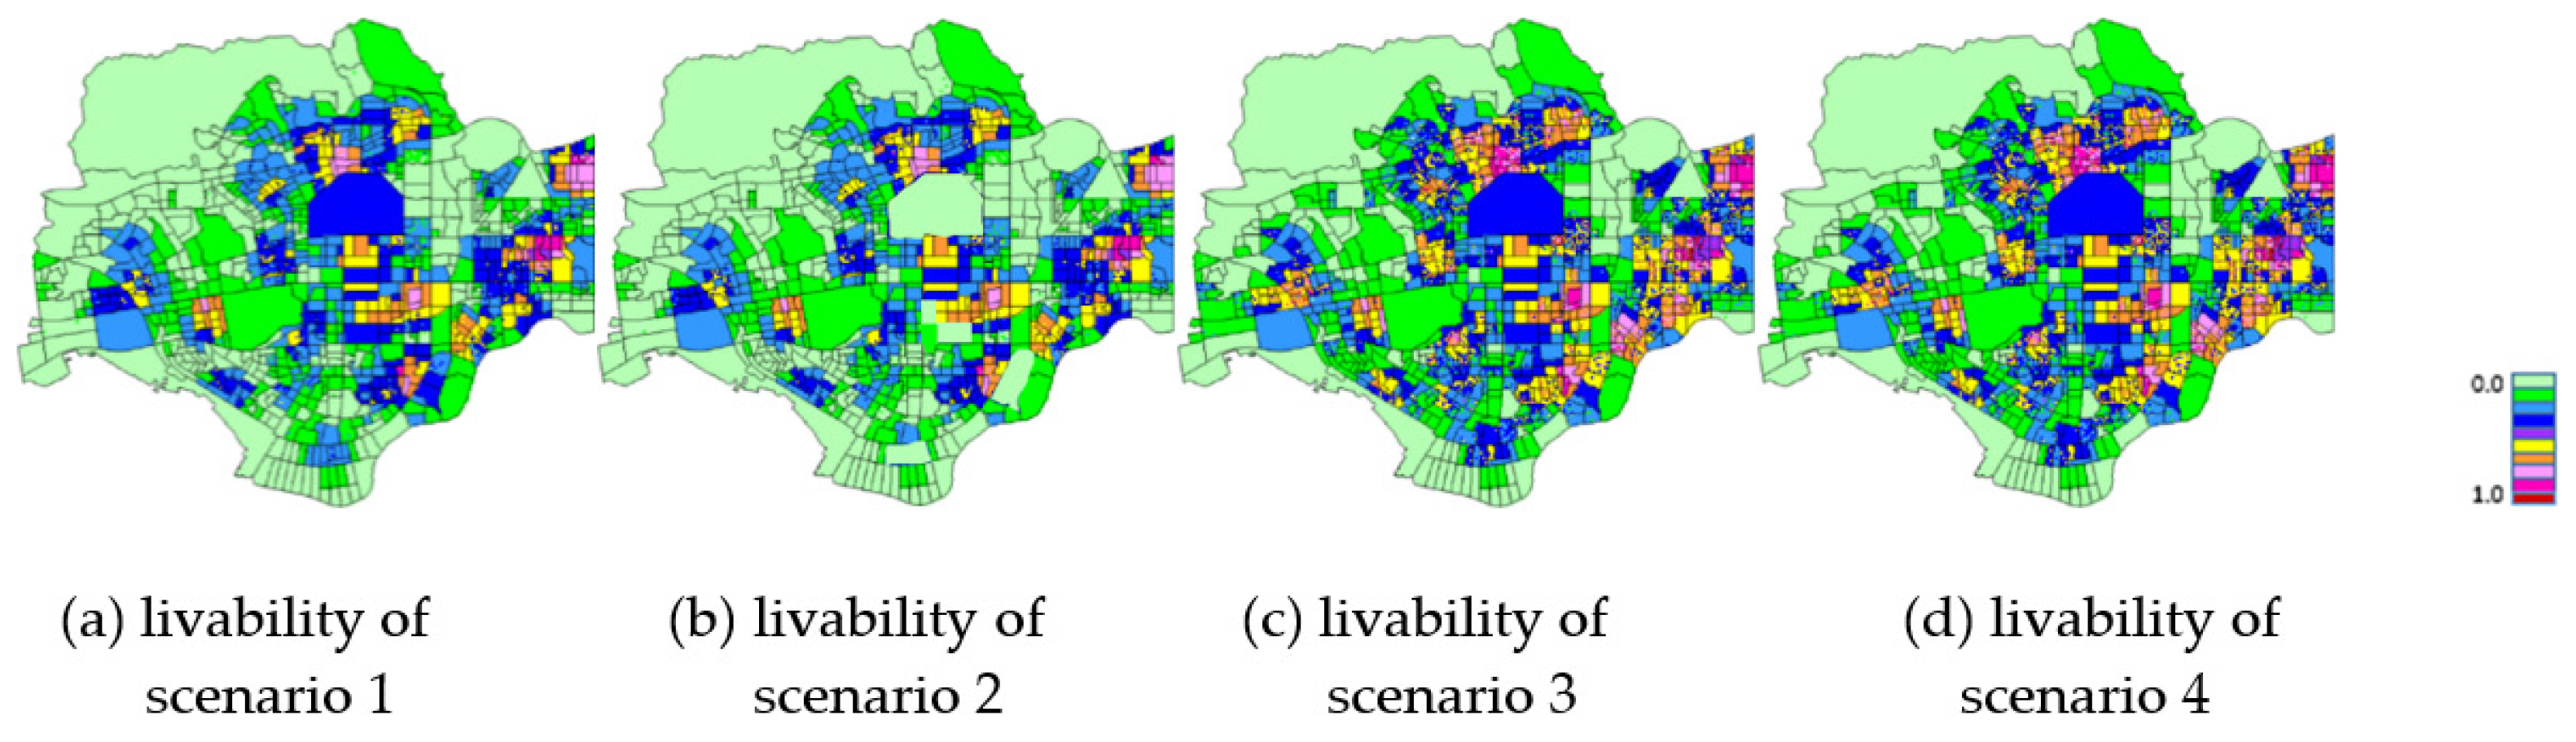 cities rank livability data set global